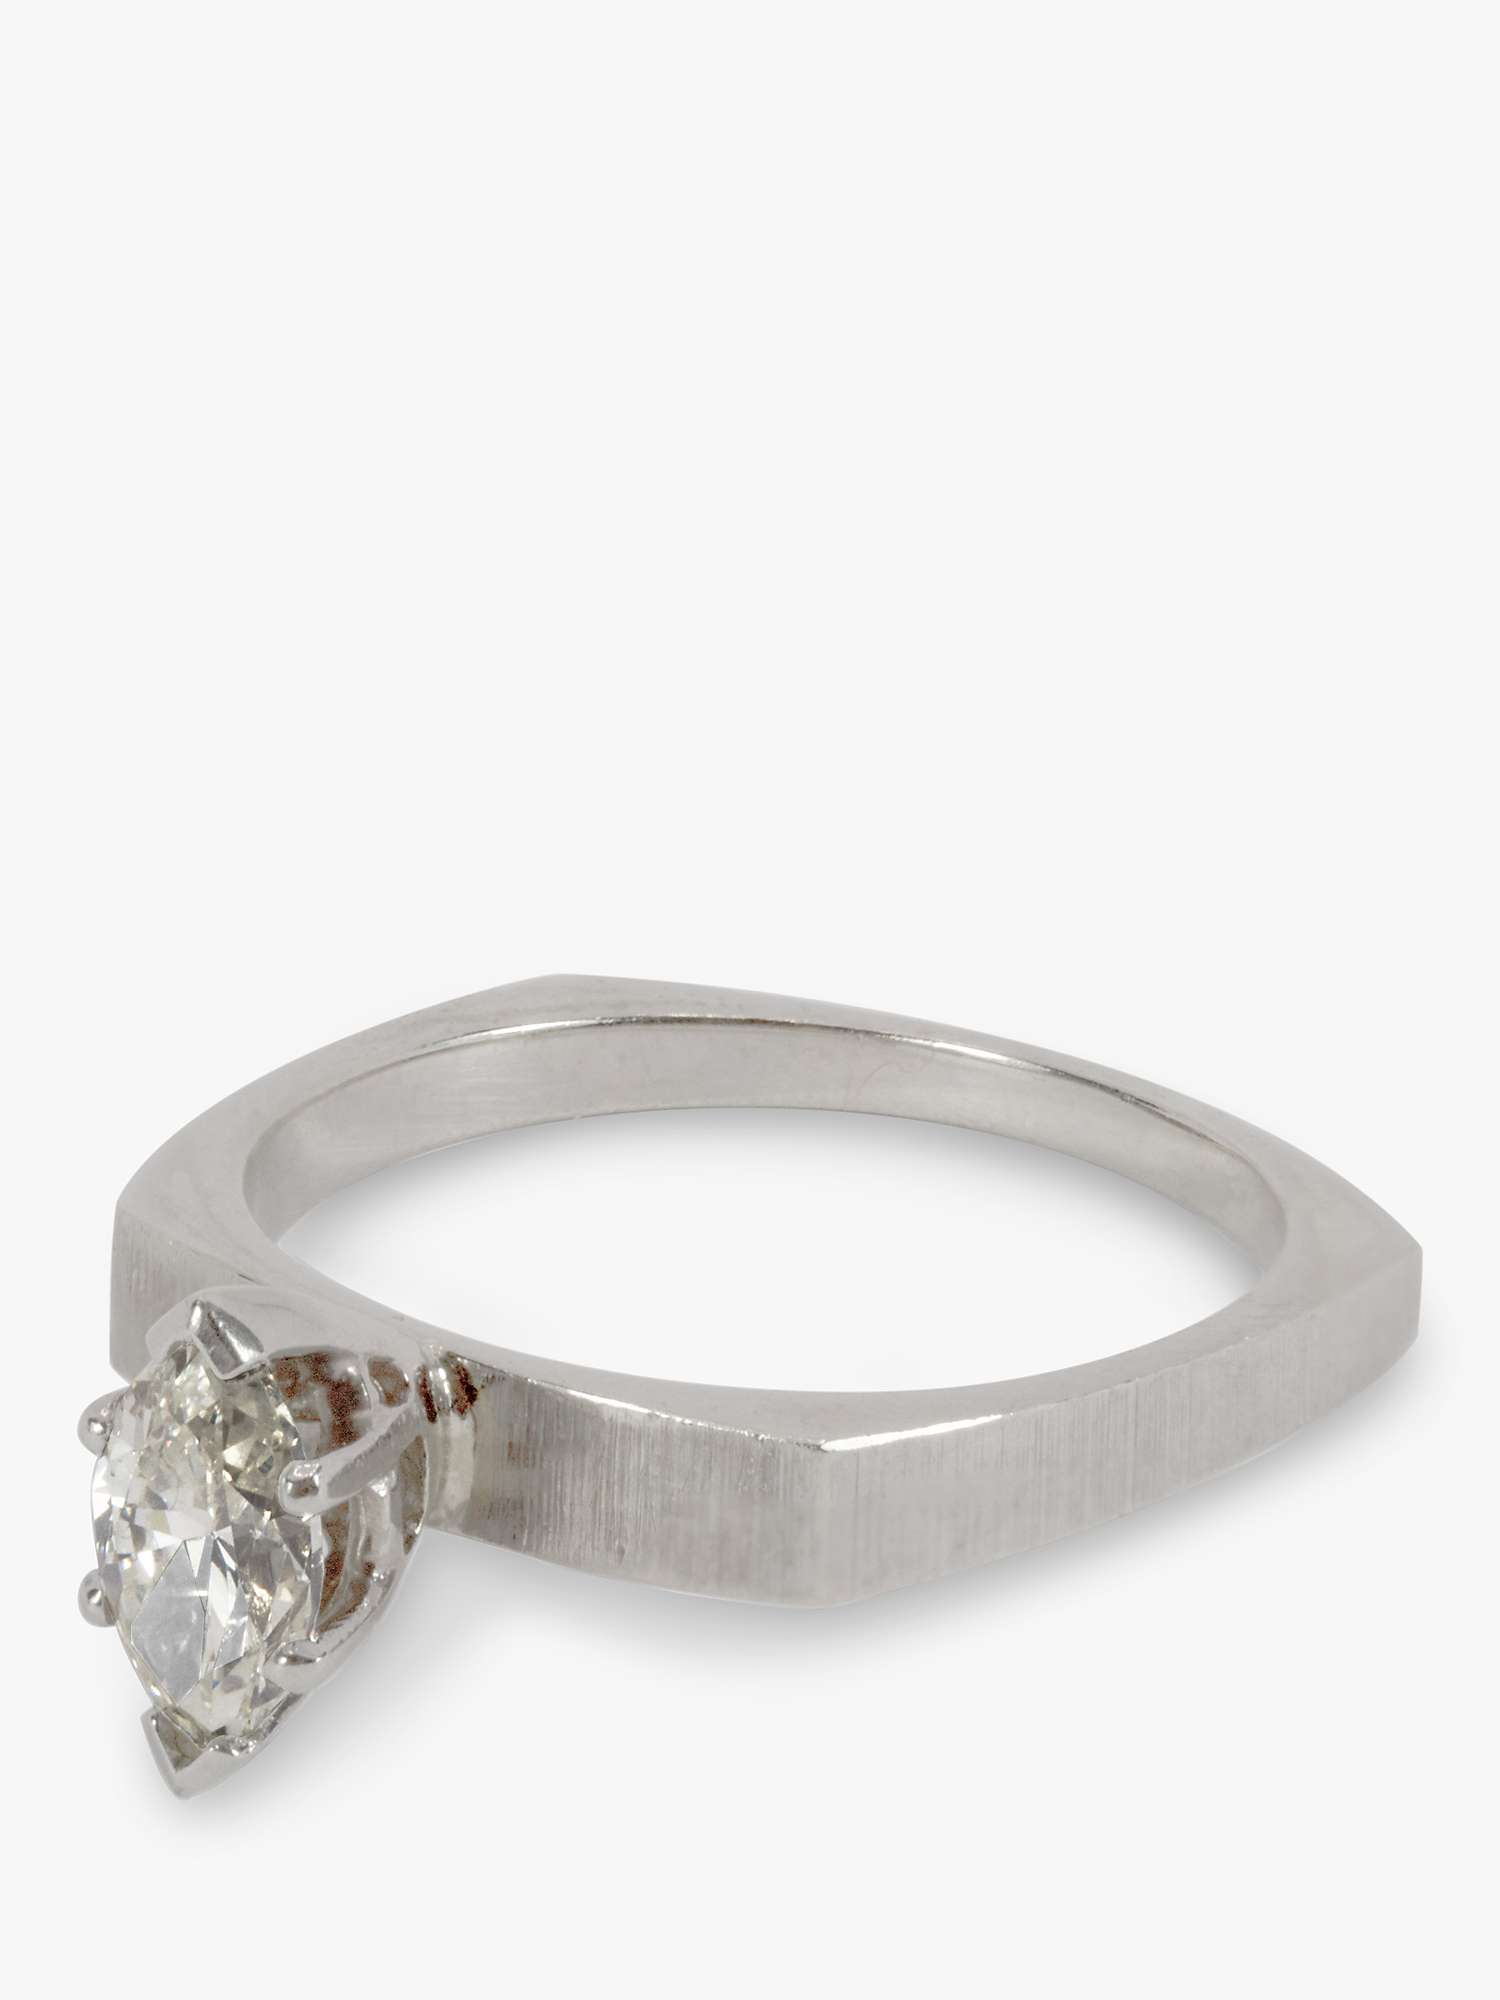 Buy Kojis 14ct White Gold Second Hand Diamond Ring Online at johnlewis.com